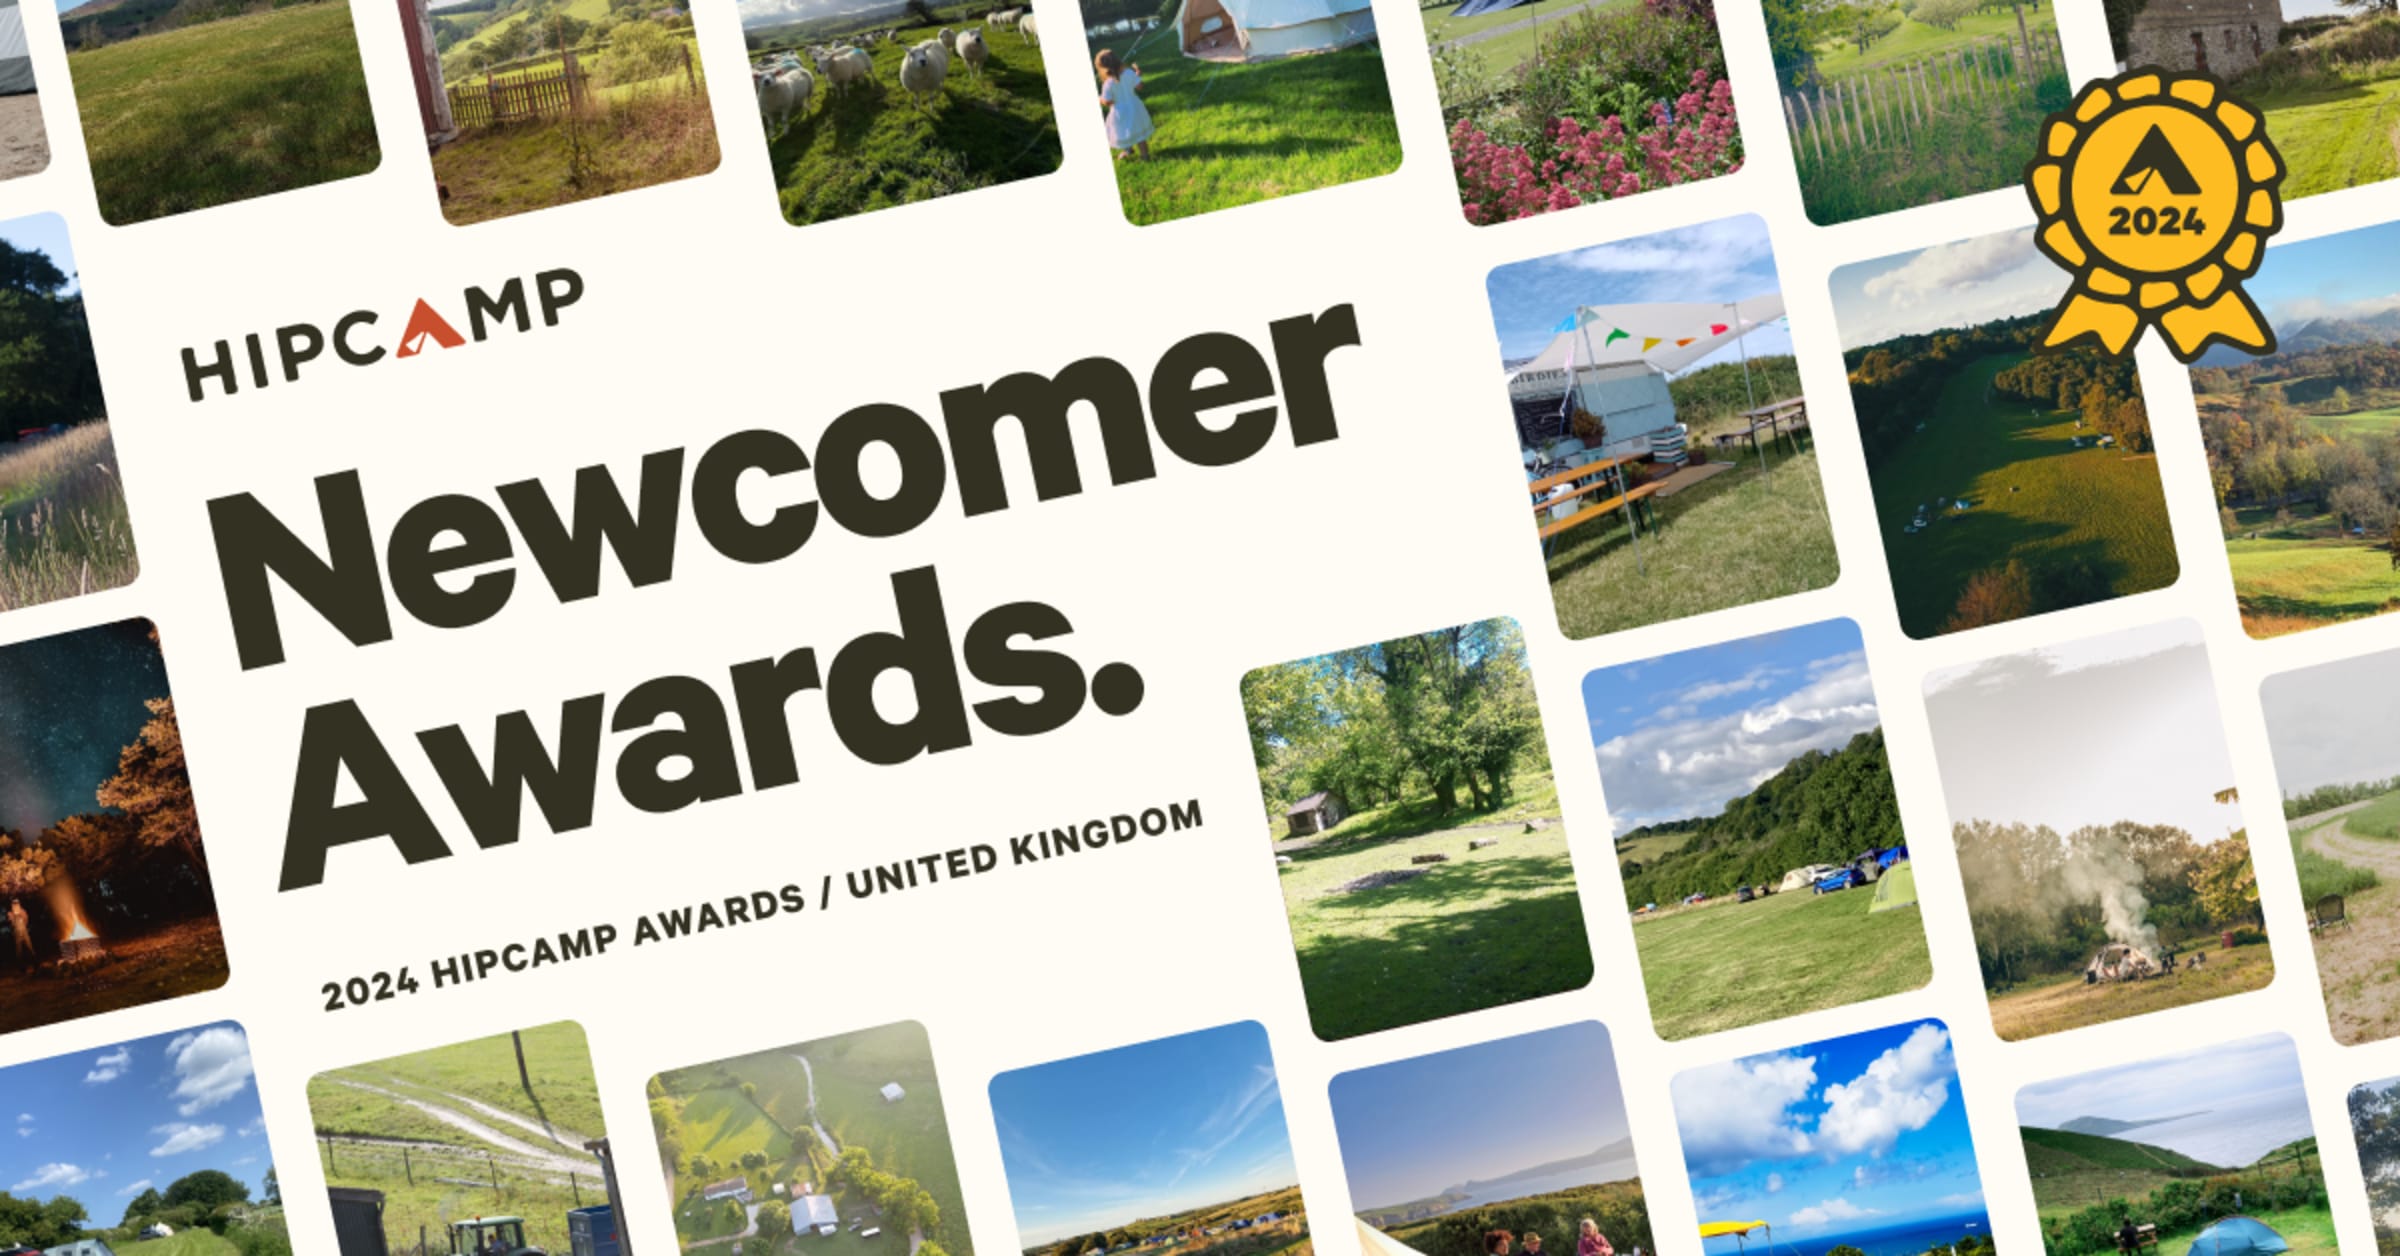 Hipcamp Newcomer Awards 2024: UK Edition